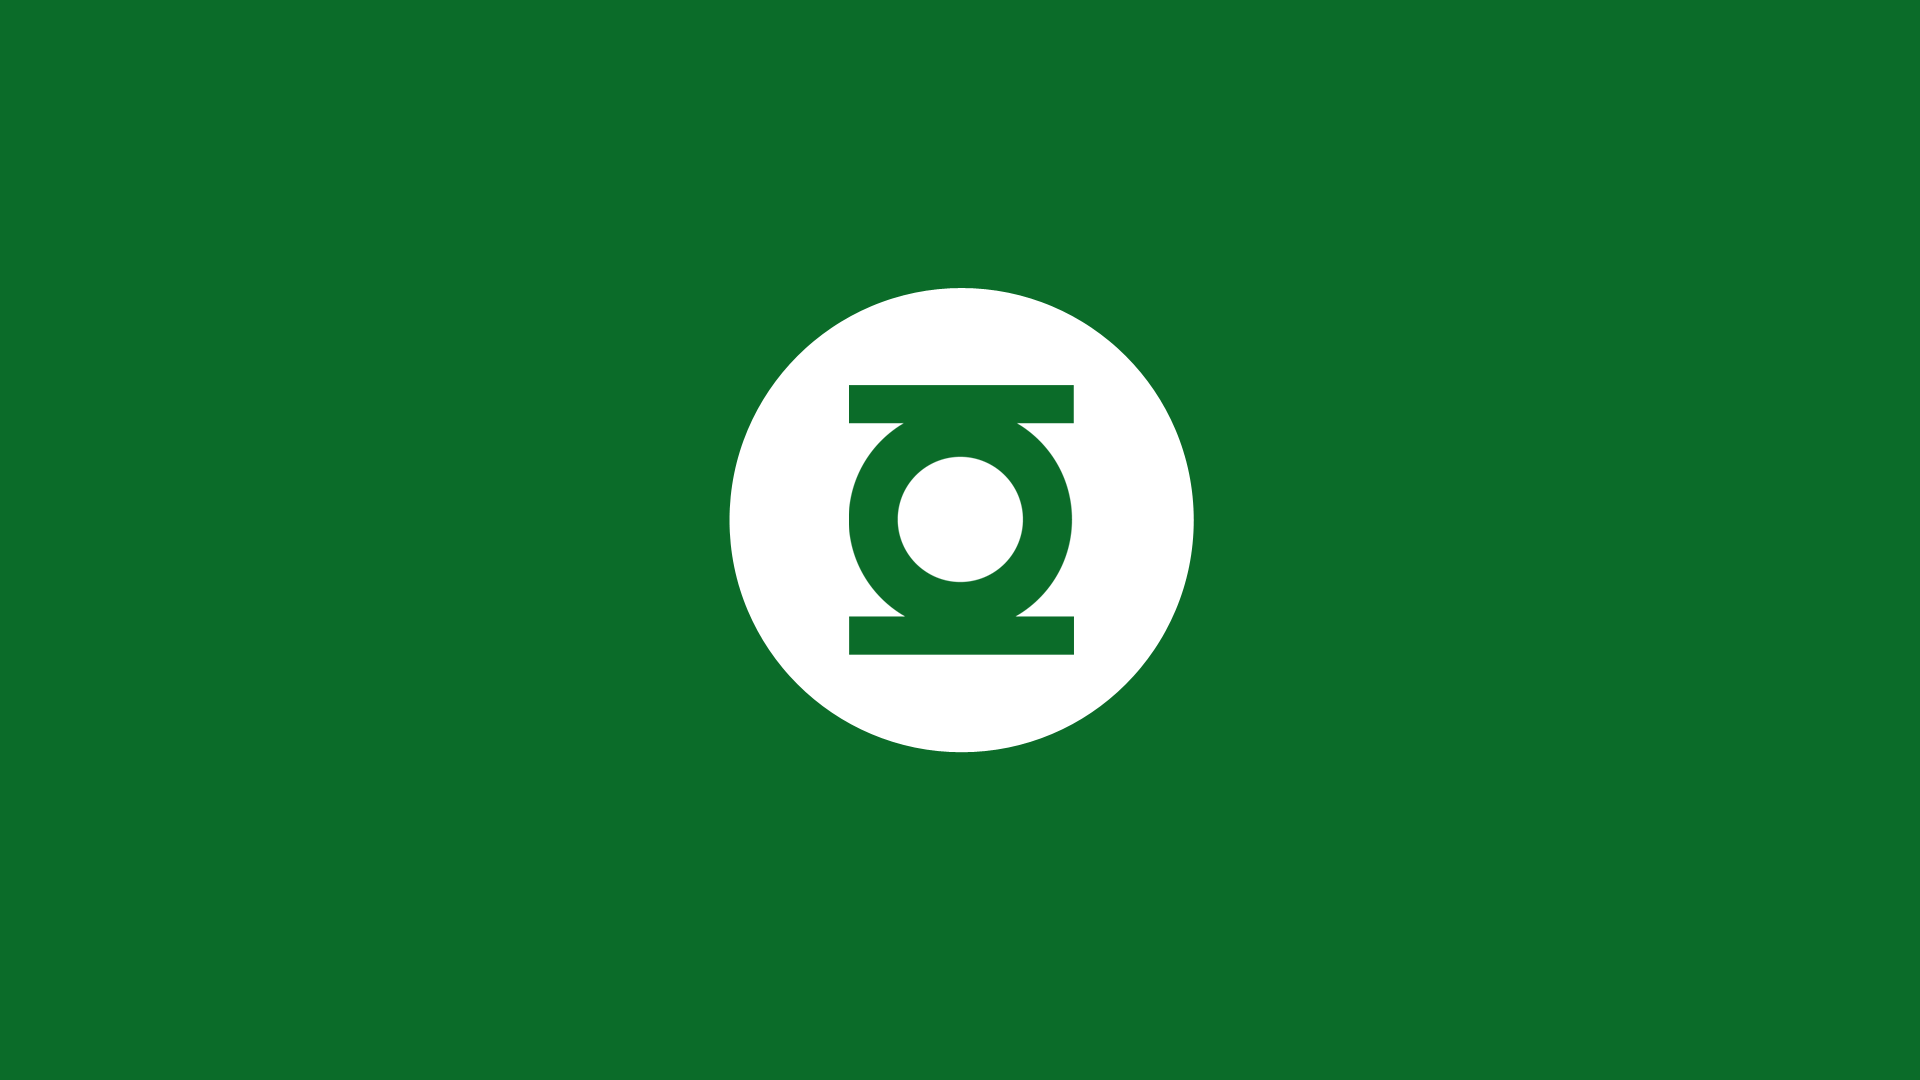 Green Lantern Logo Wallpaper For Laptops HD